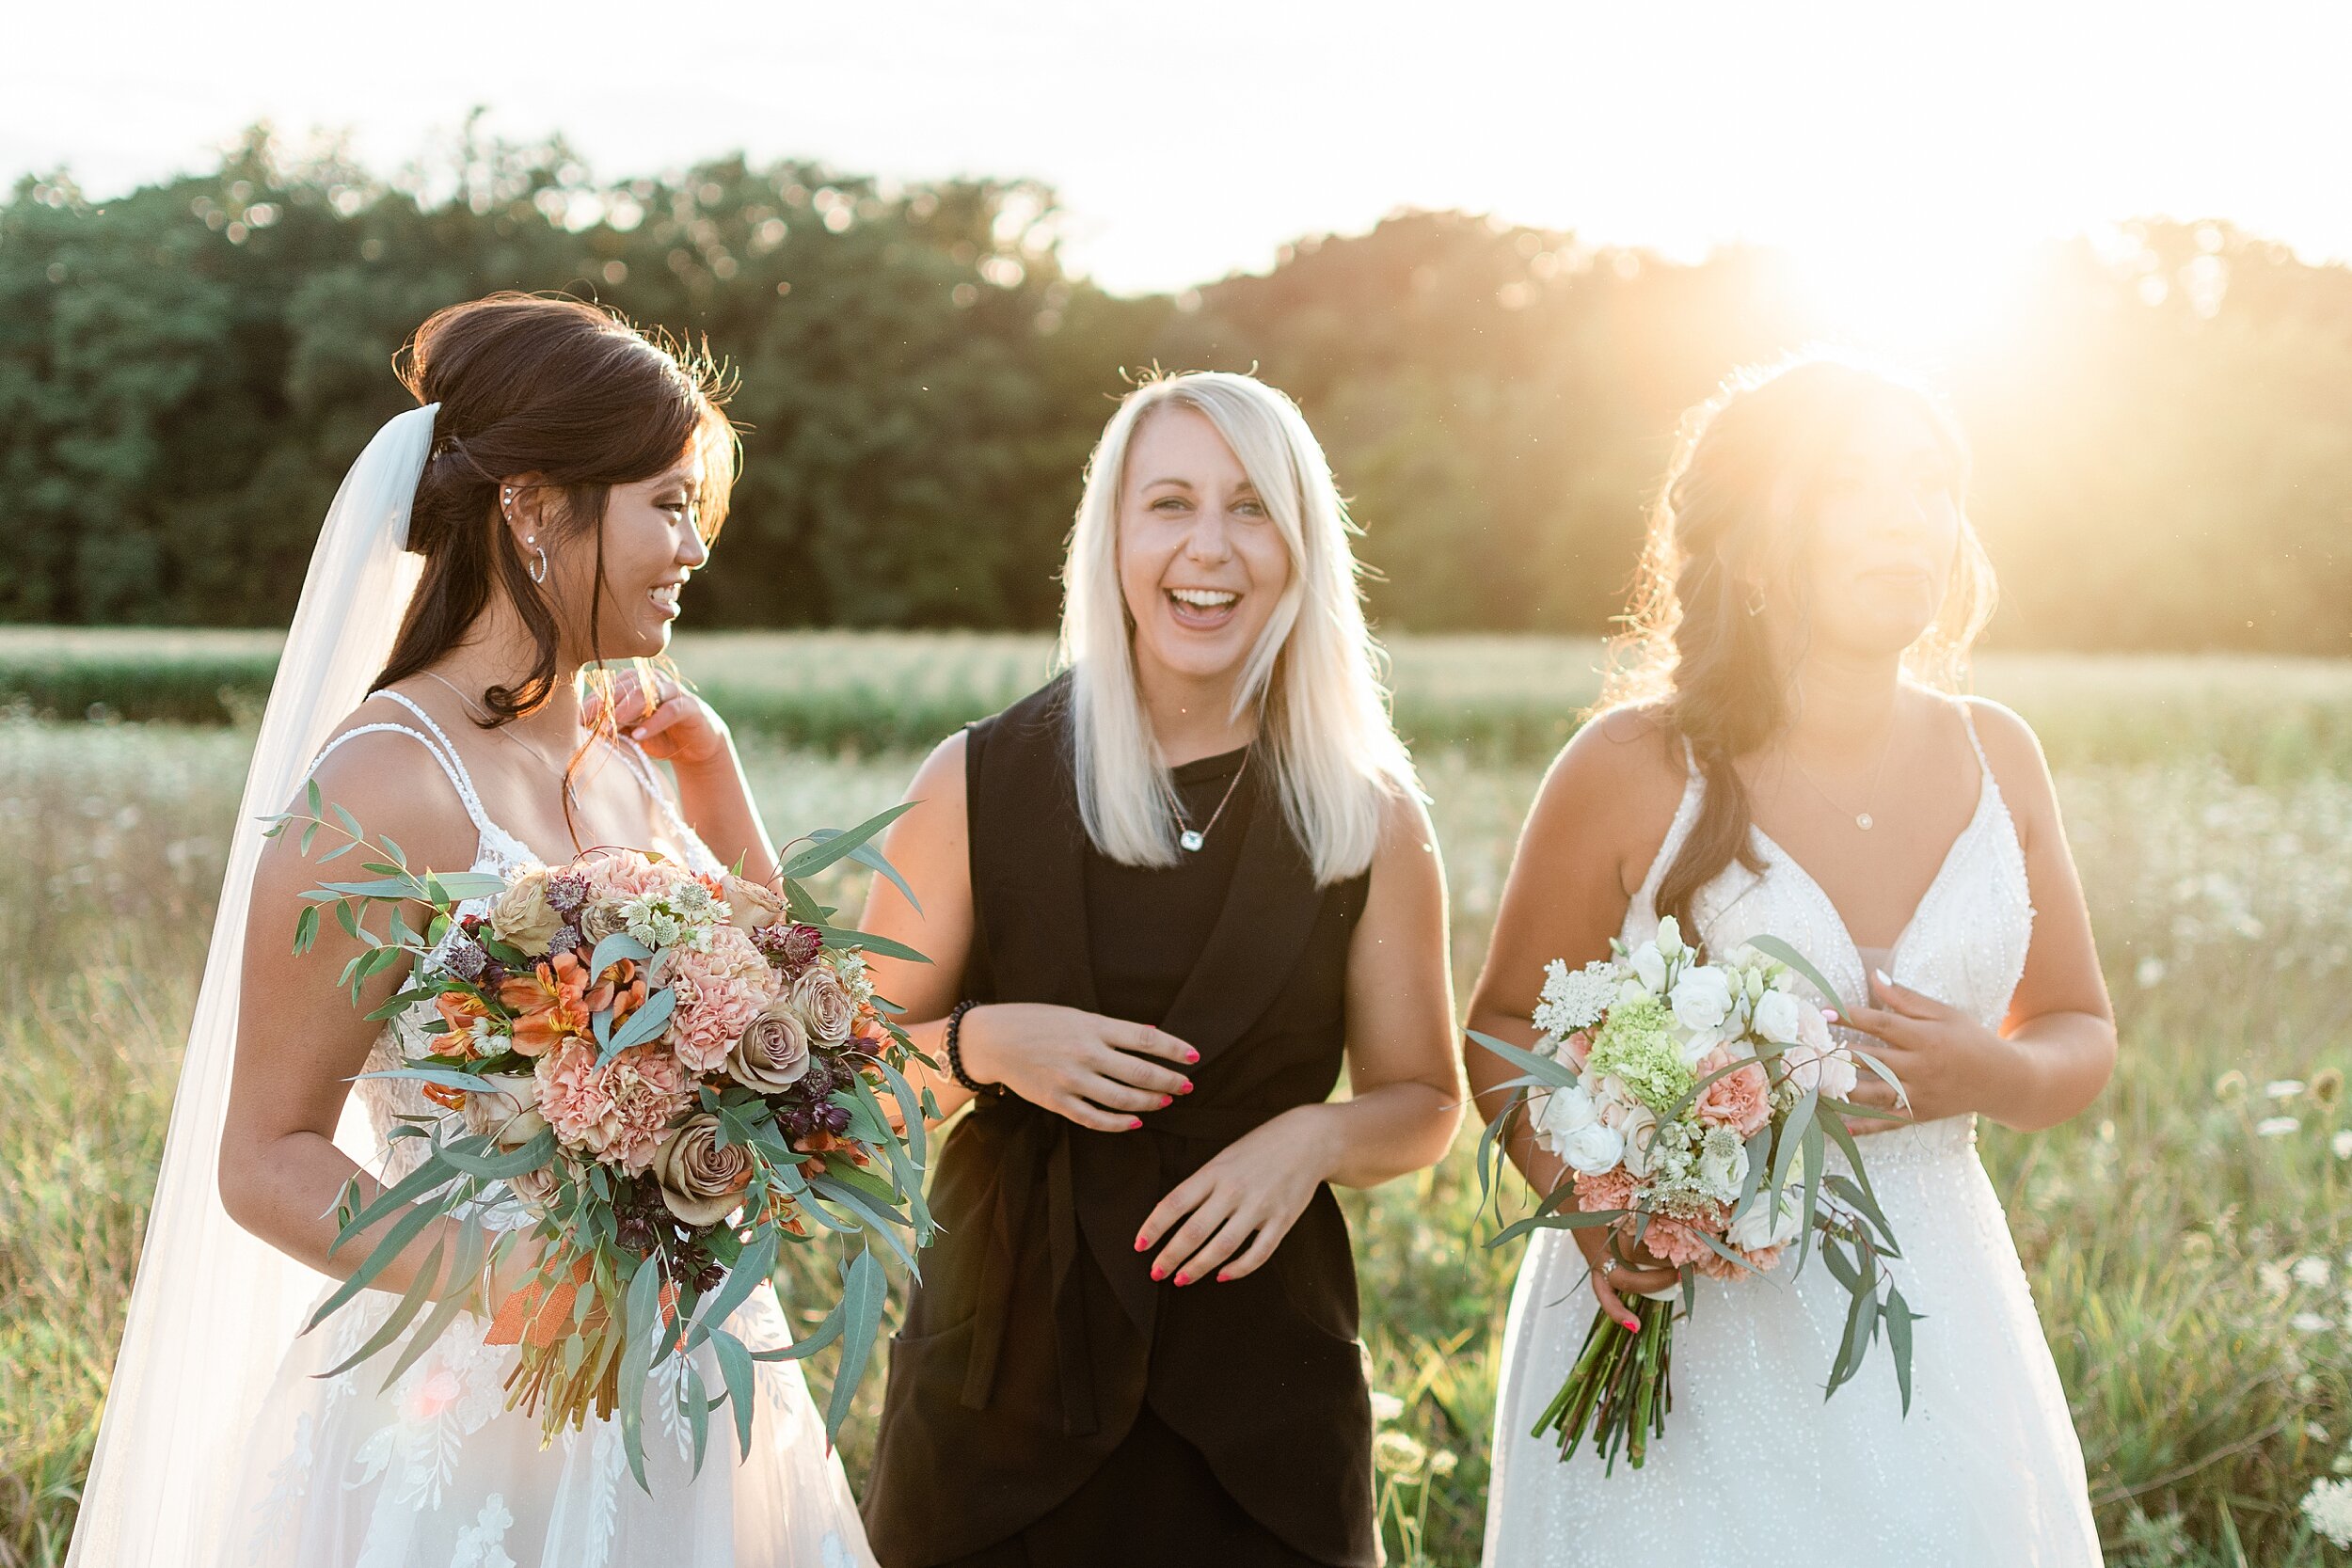 sisters-bridal-boutique-laudicks-jewelry-betsys-bouquets-van-wert-ohio-wedding-photographer-the-association-photography_6925.jpg